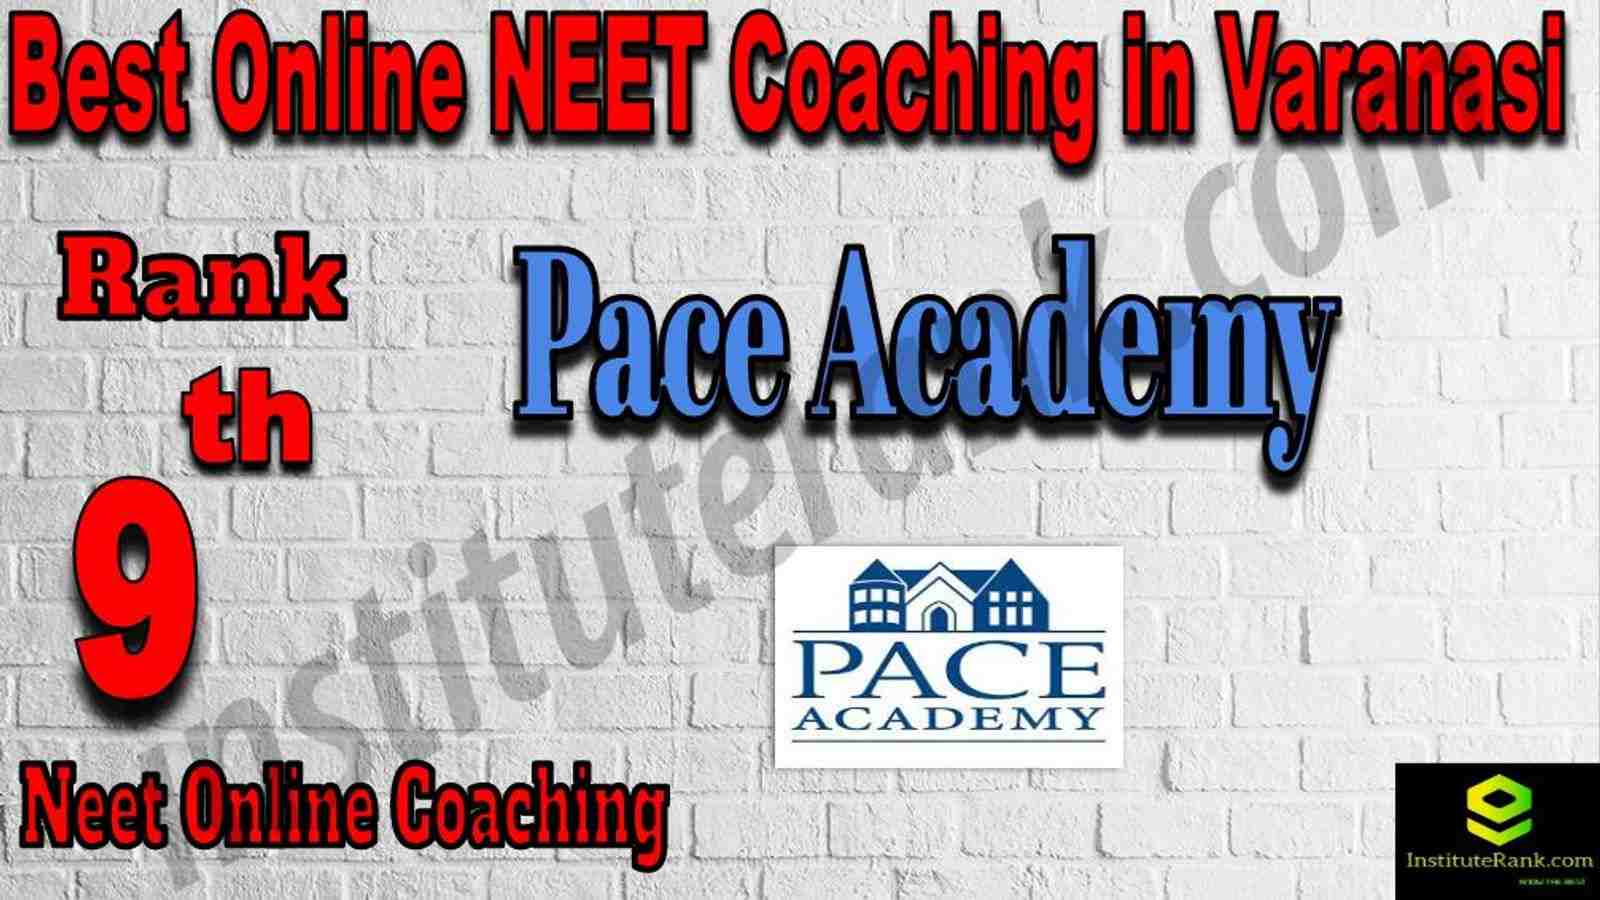 9th Best Online Neet Coaching in Varanasi